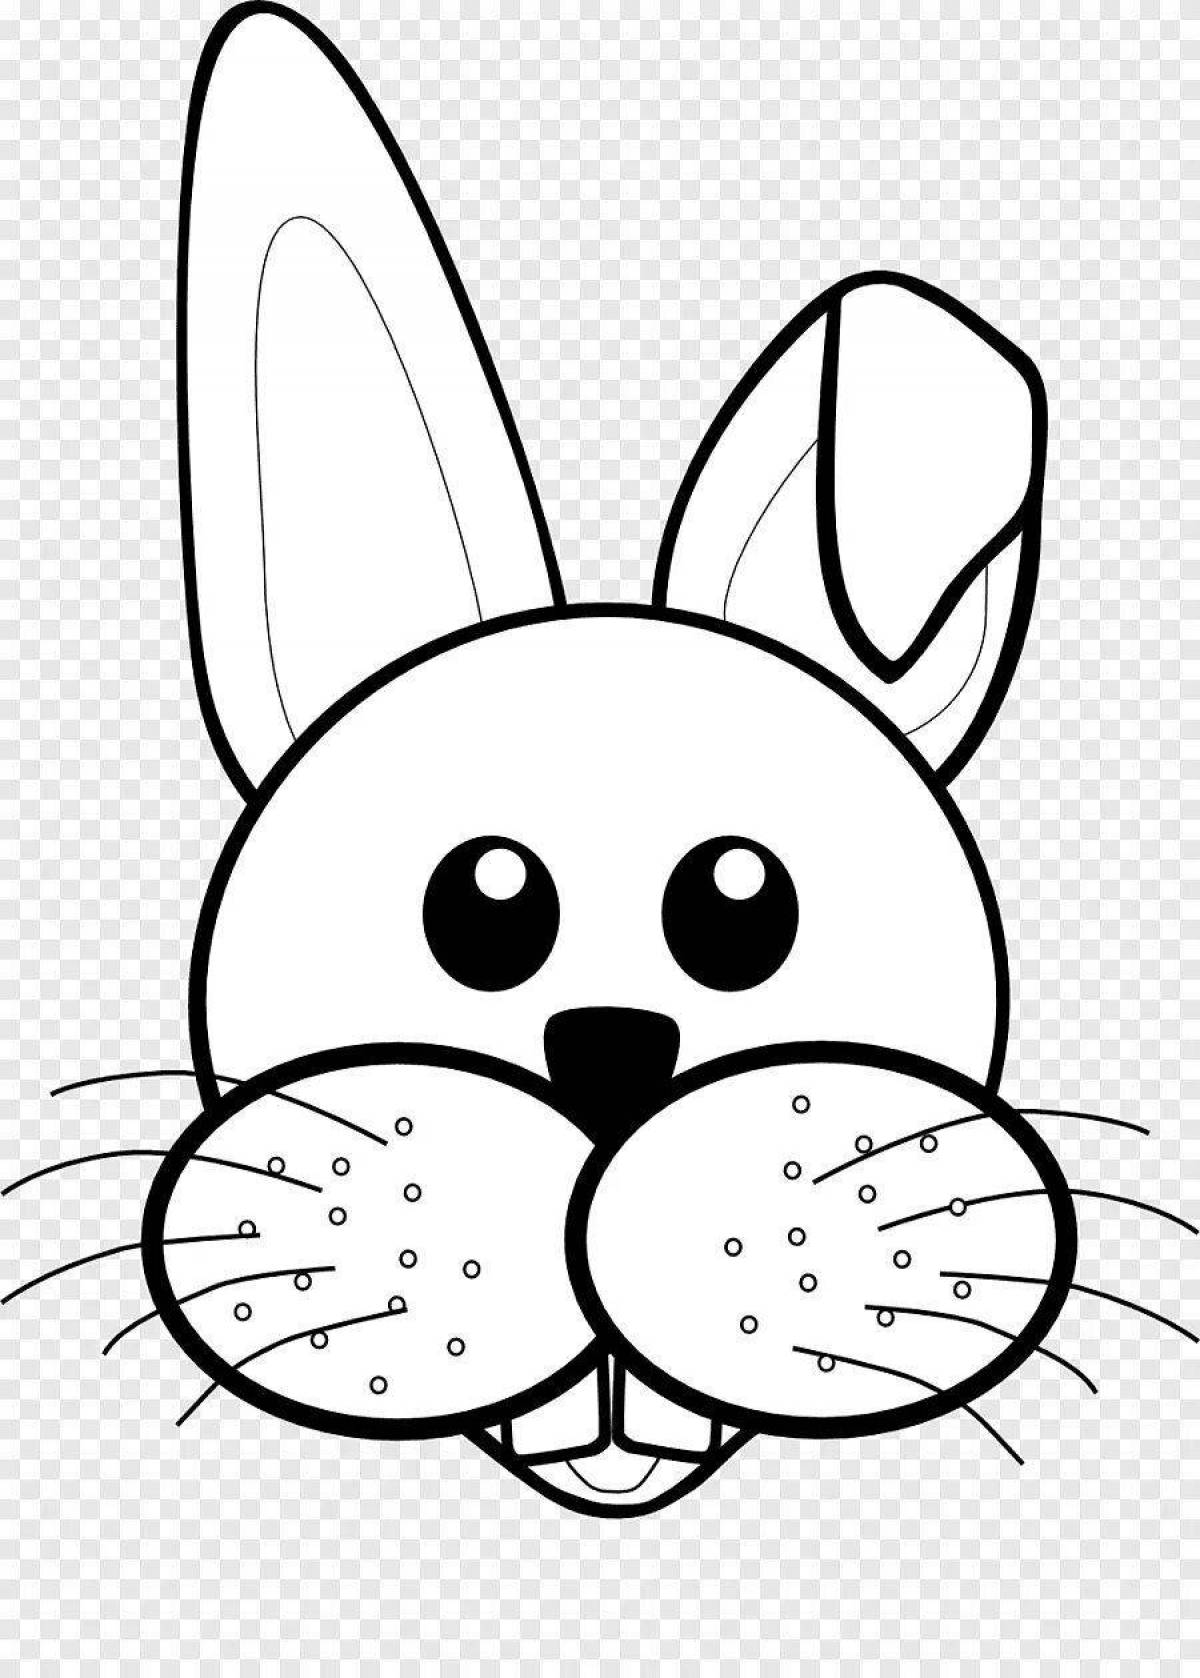 Huggable coloring page bunny head